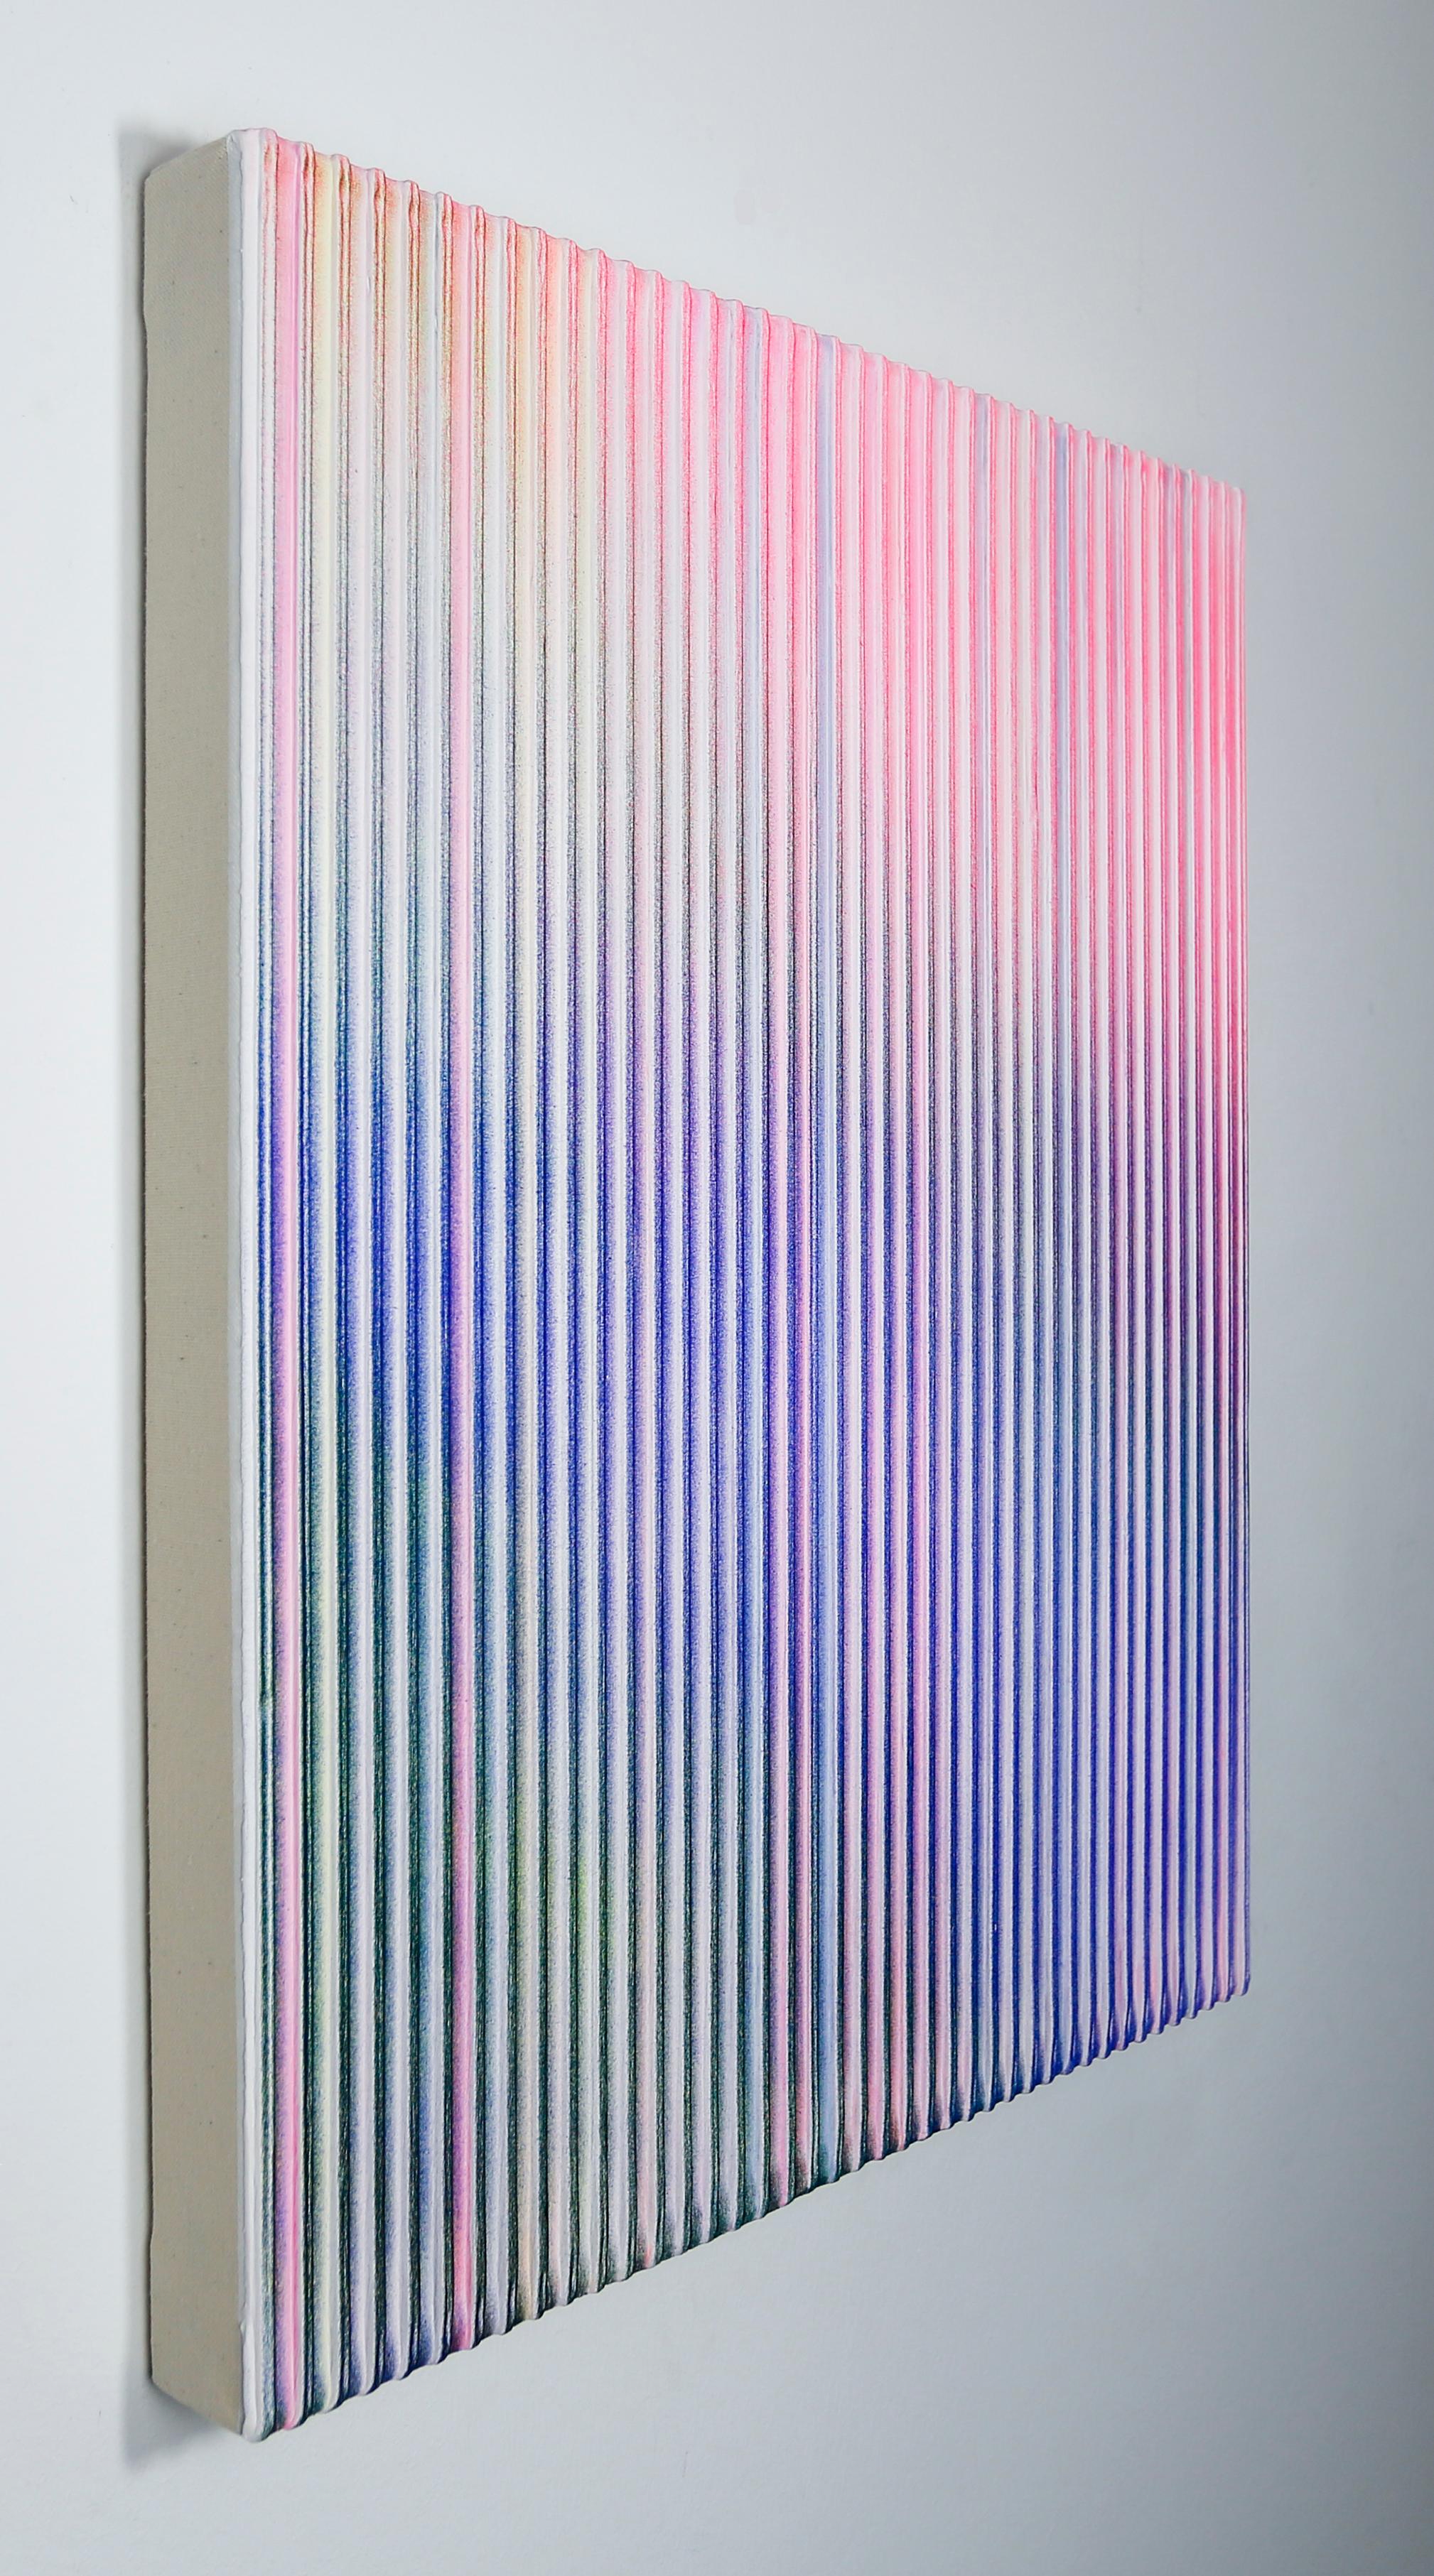 Display No 23 - Striped, geometric, white and pink, minimal, abstract painting  - Painting by Zdenek Konvalina